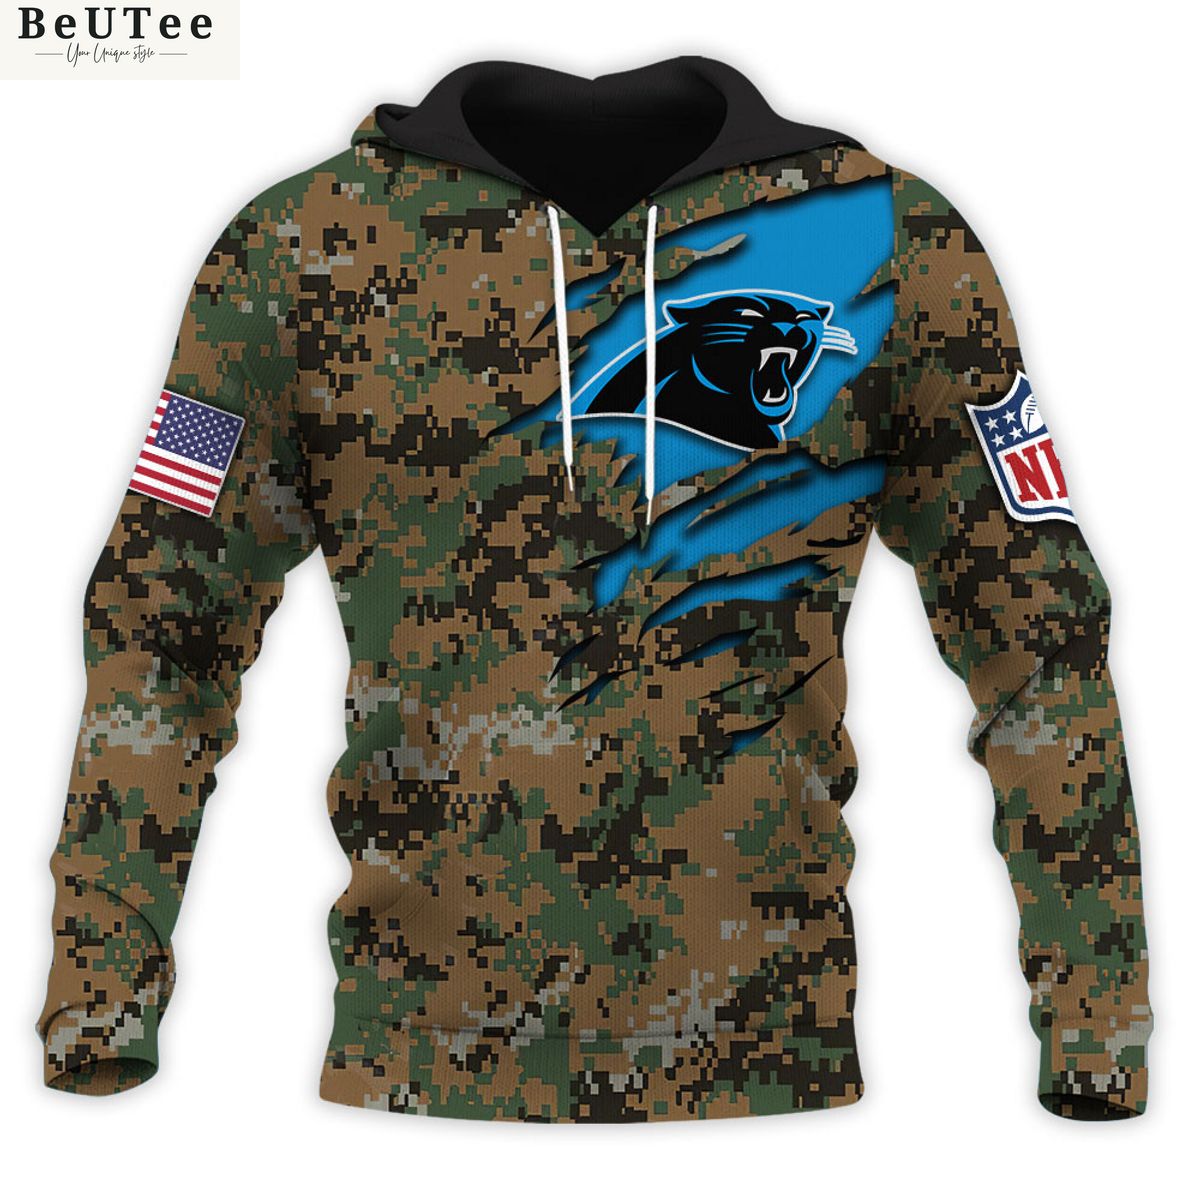 nfl honor us marine veterans carolina panthers personalized 3d hoodie t shirt sweatshirt 1 p5ryO.jpg